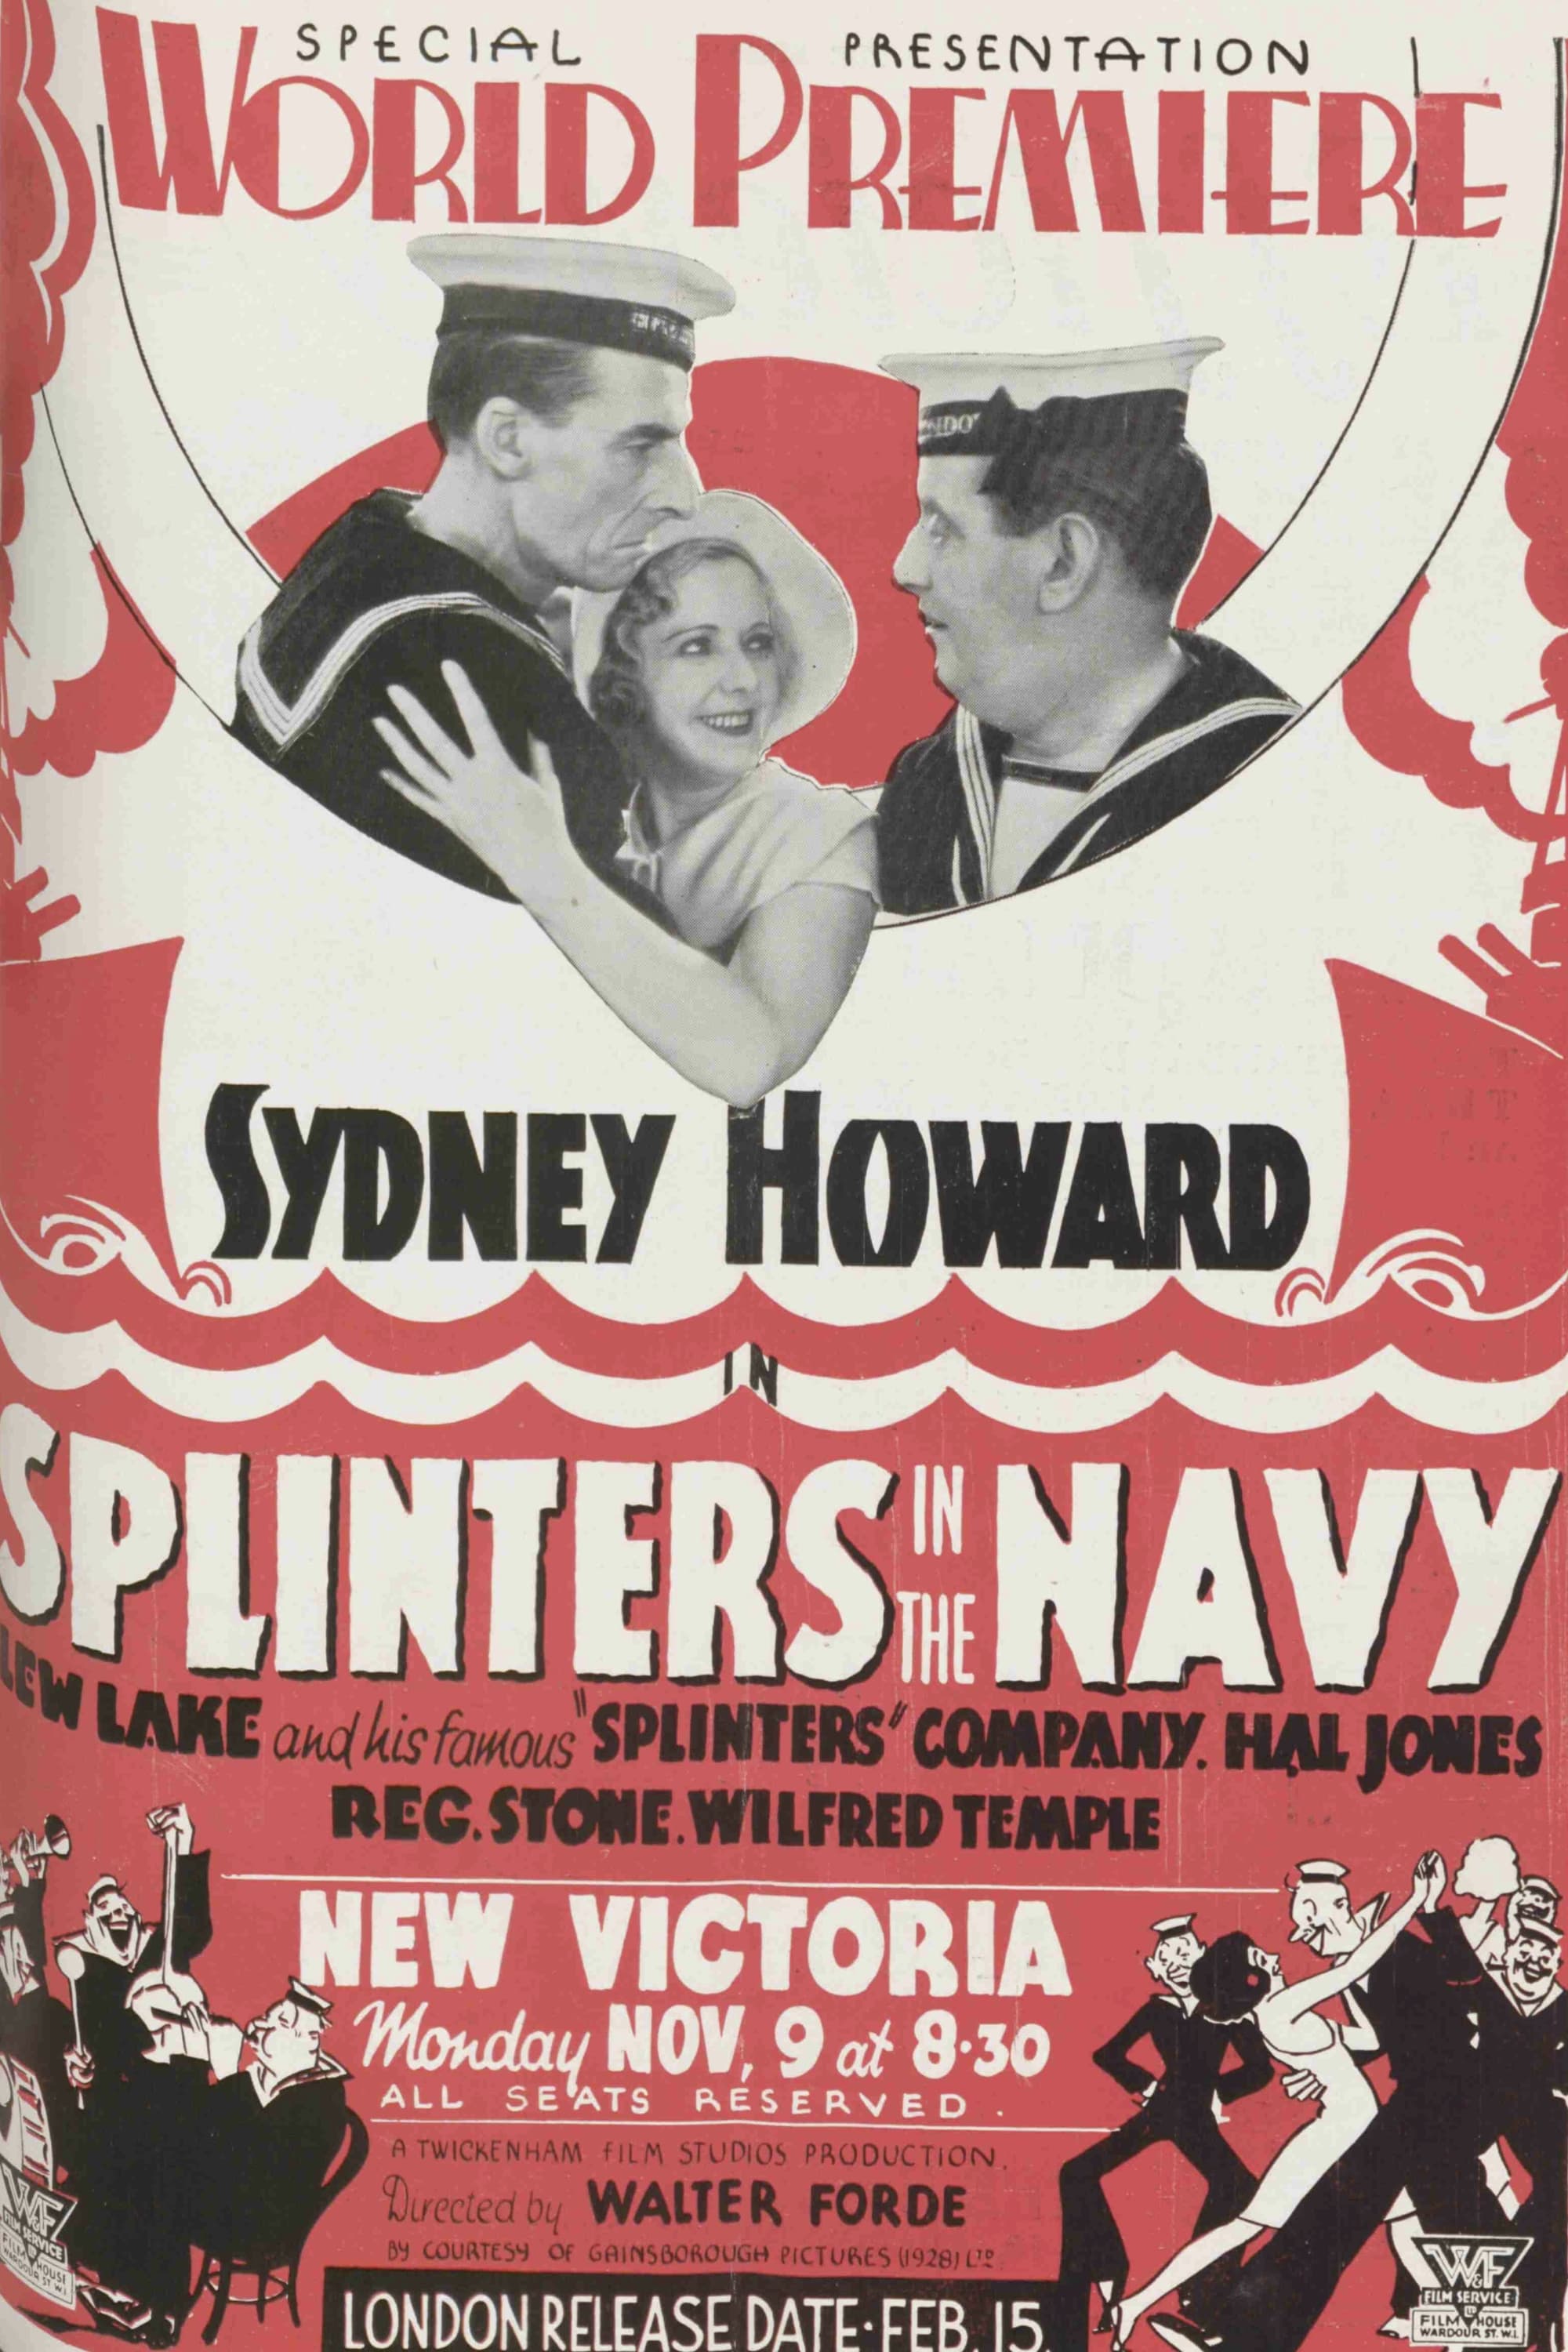 Splinters in the Navy